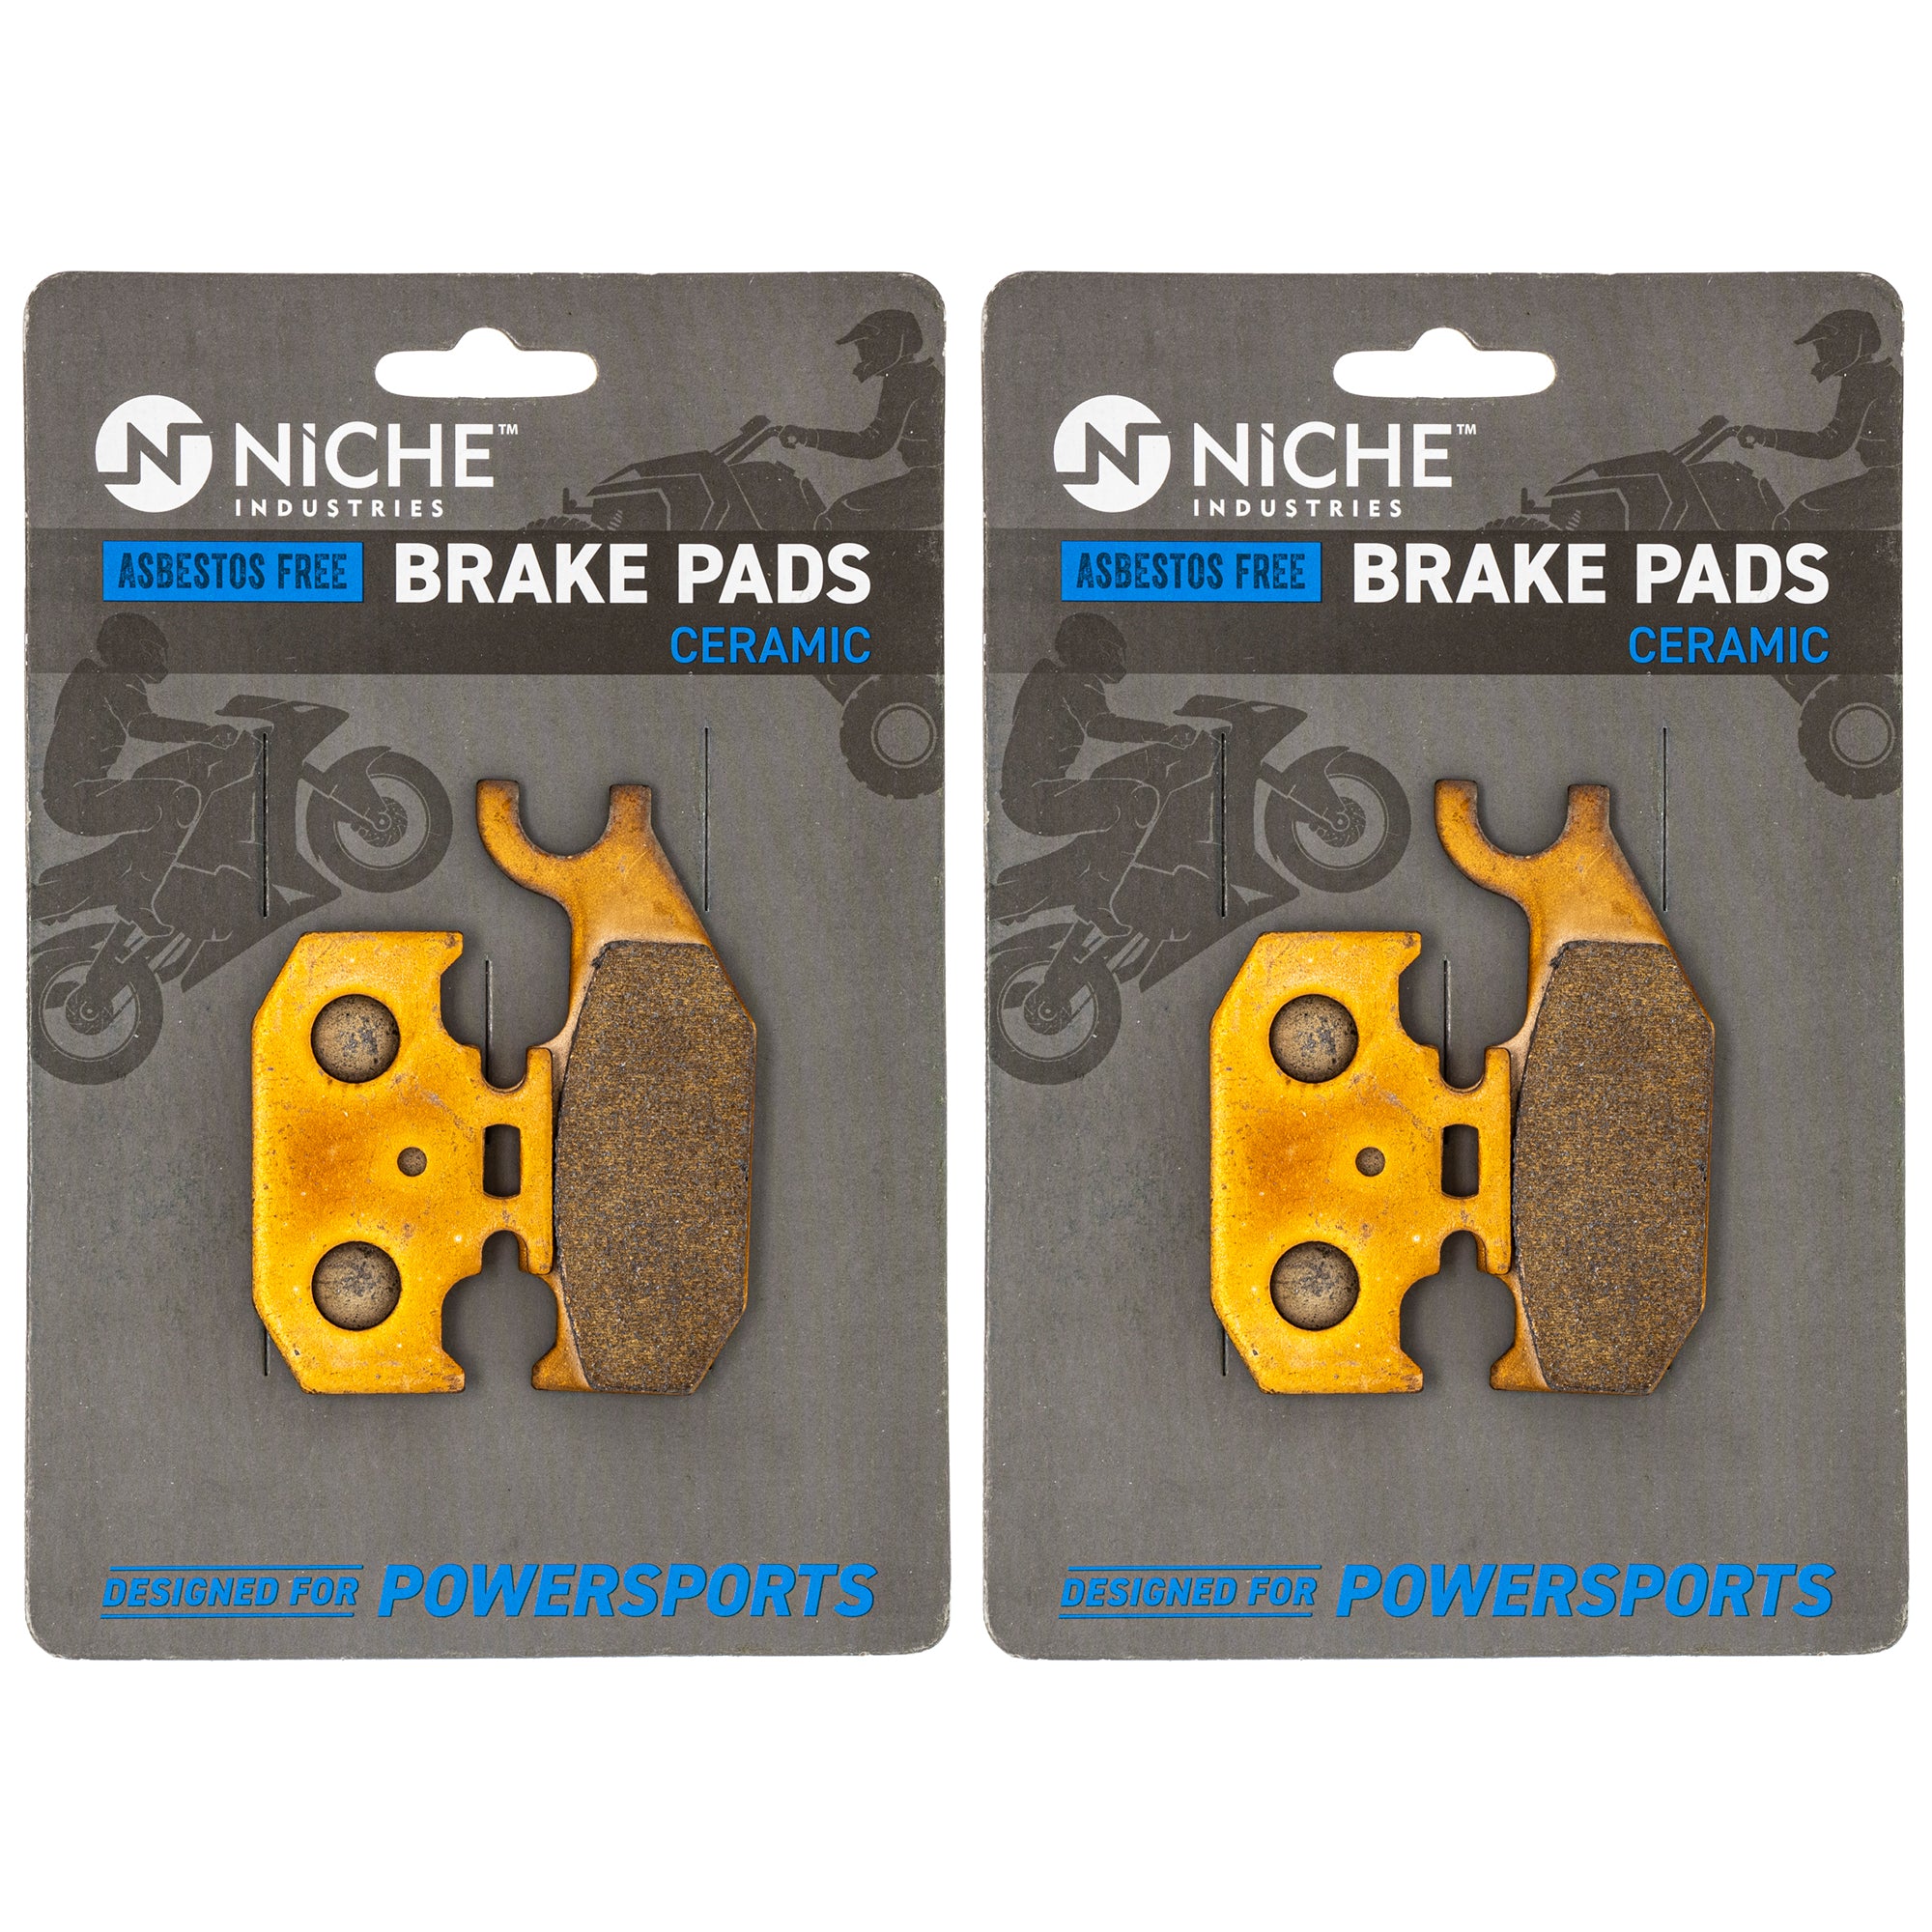 NICHE MK1001609 Ceramic Brake Pad Kit for BRP Can-Am Ski-Doo